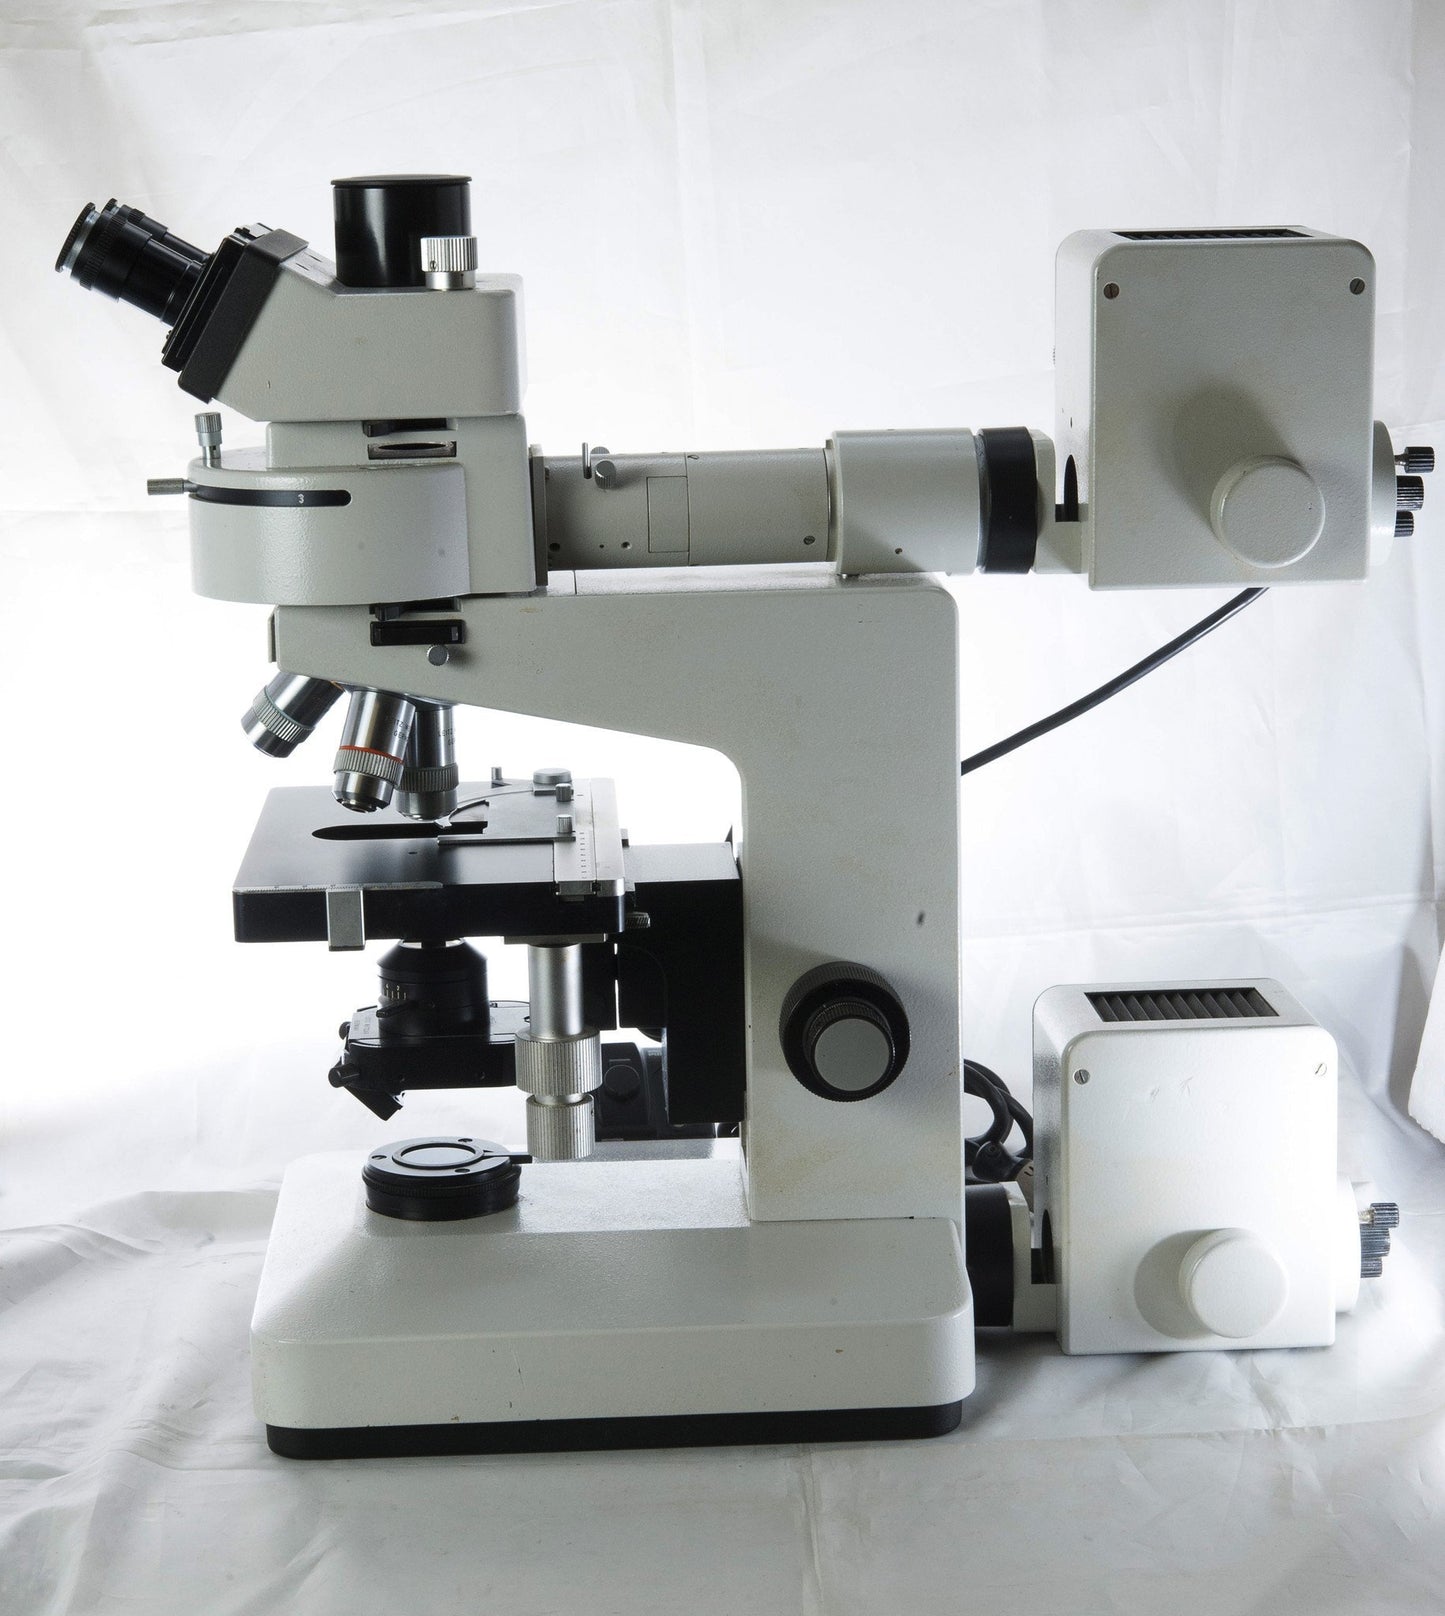 Leitz Dialux 20 Fluorescence Microscope - Microscope Central
 - 3